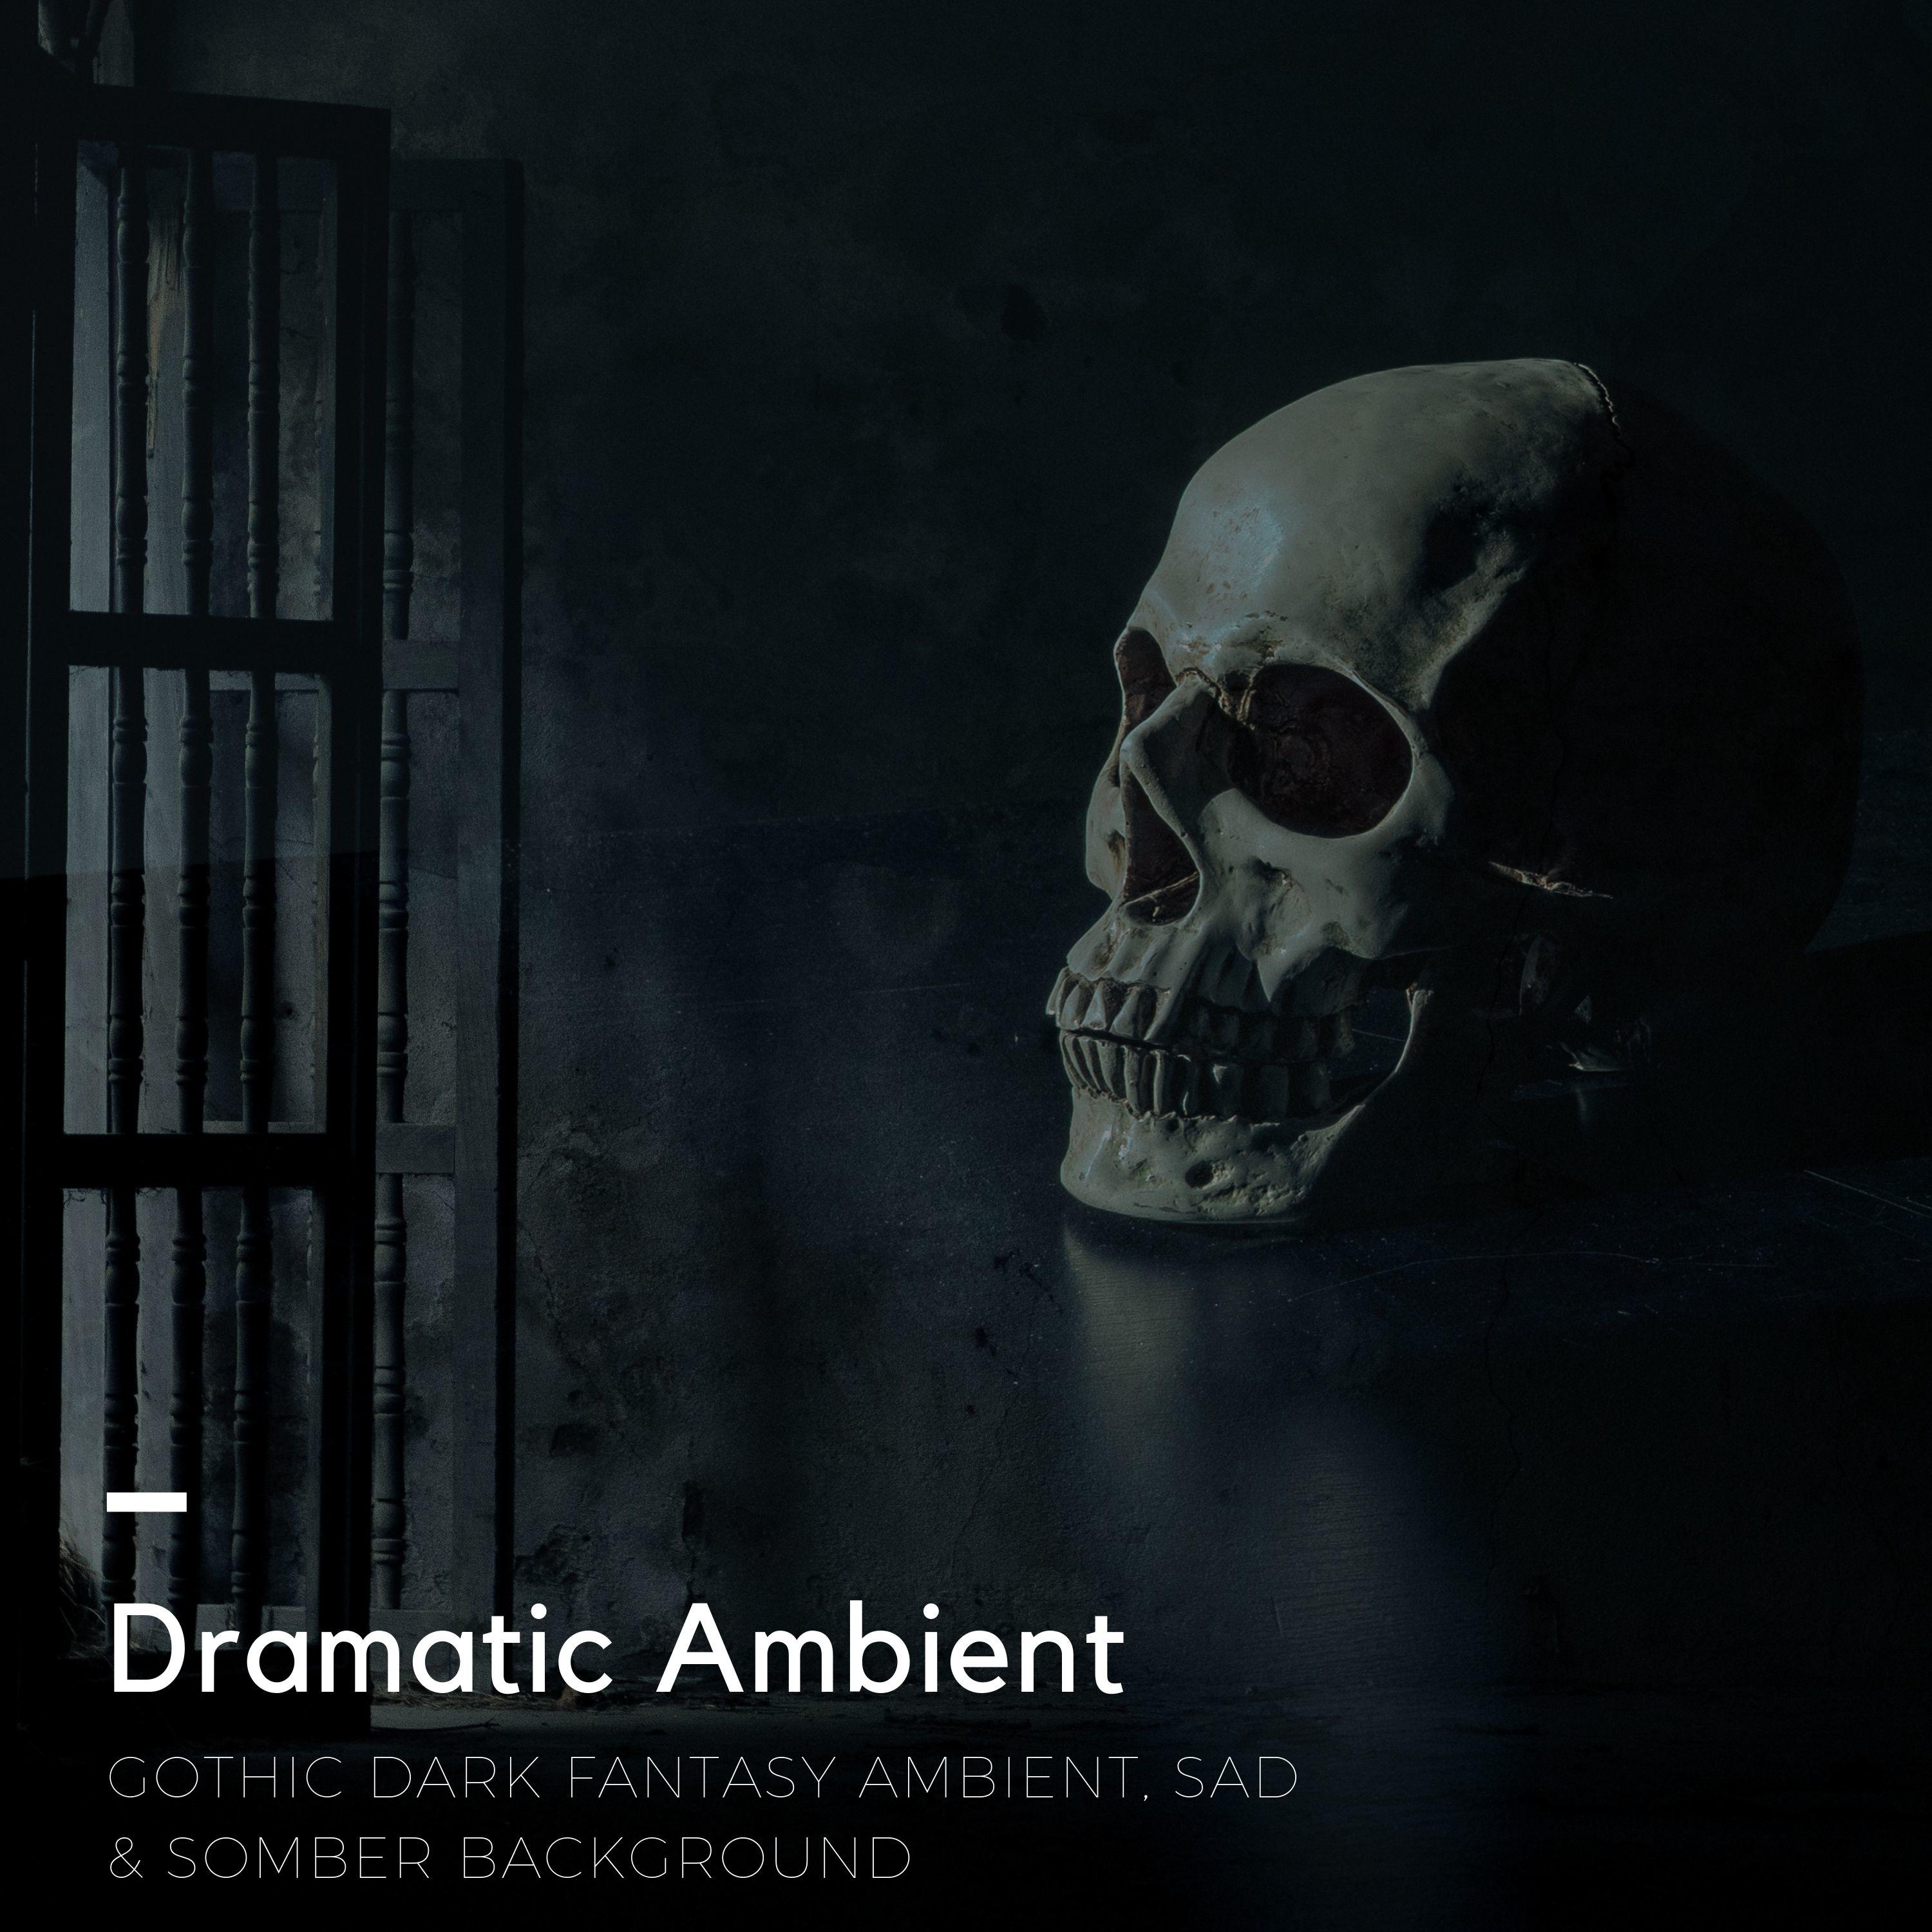 Dramatic Ambient - Gothic Dark Fantasy Ambient, Sad & Somber Background